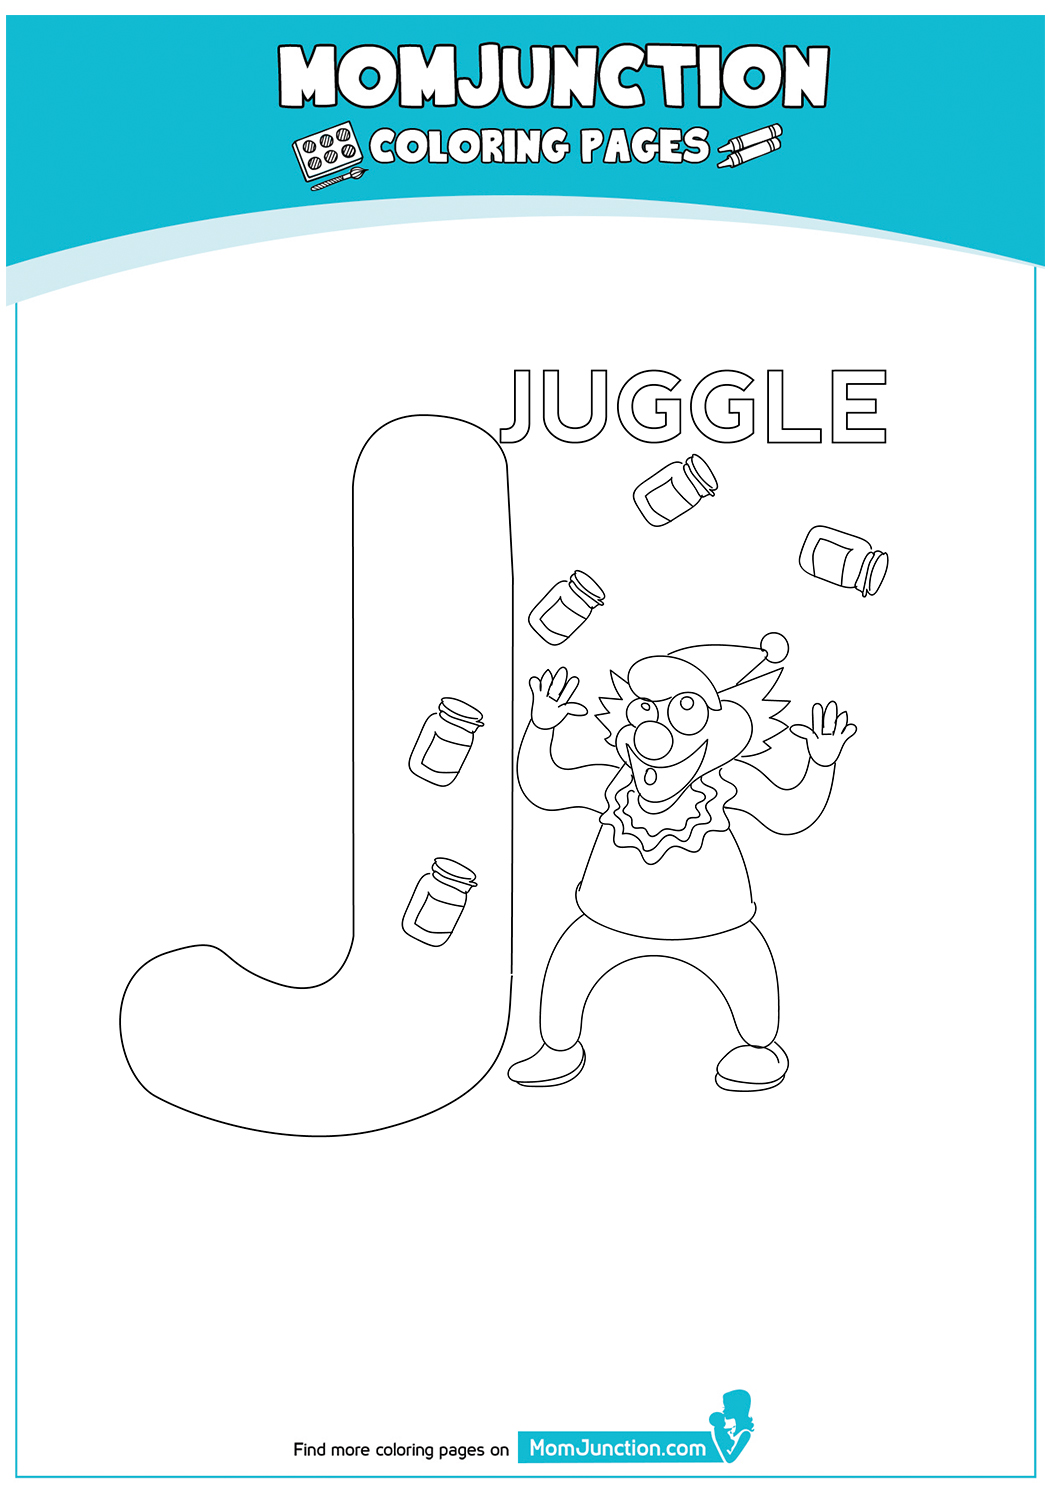 The-J-For-Juggler-17